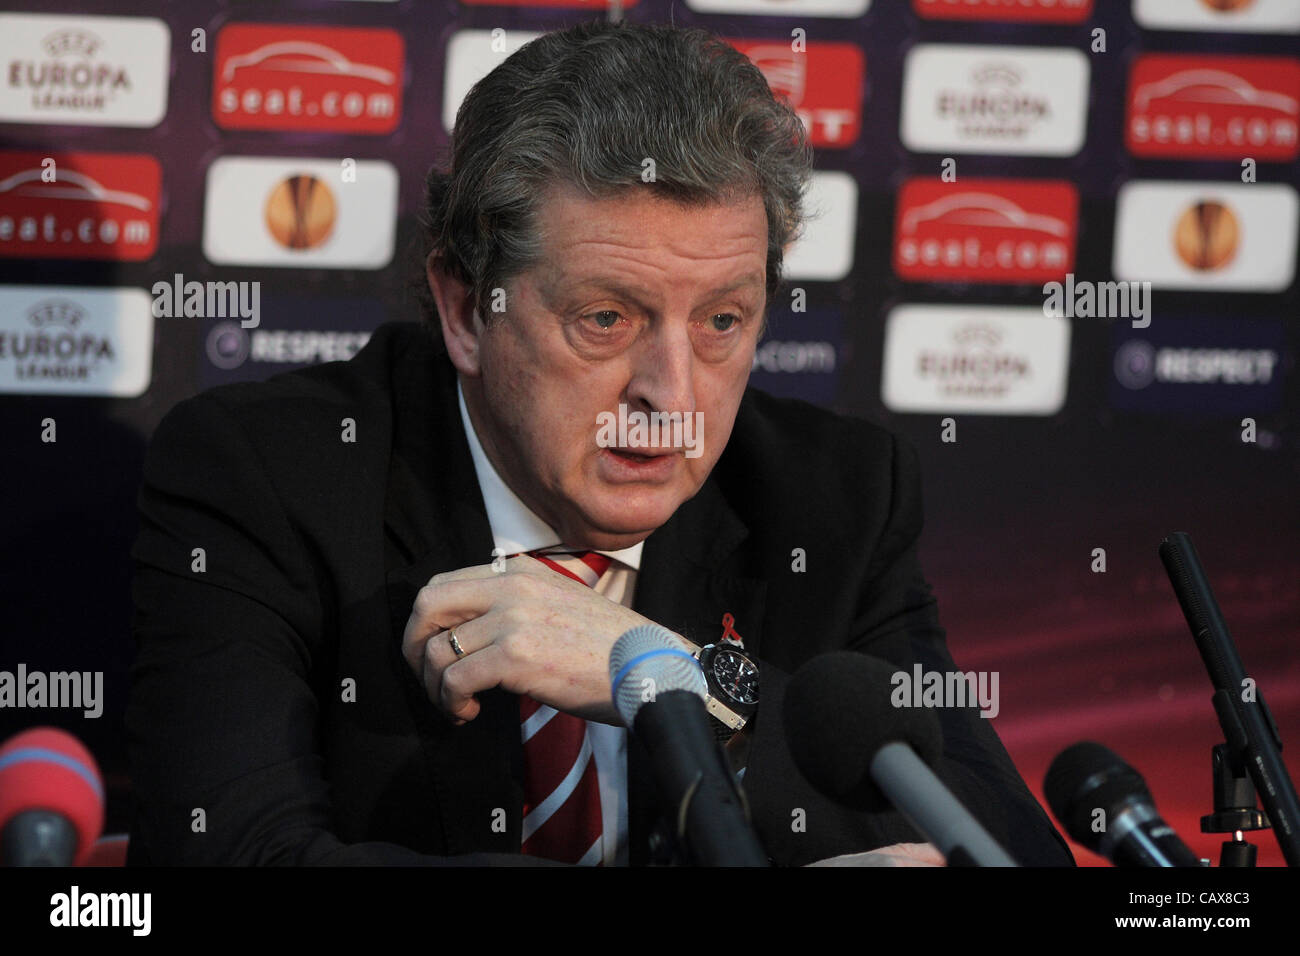 02.12.2010 Europa League Steaua Bukarest gegen Liverpool. Roy Hodgson während der Pressekonferenz in Bukarest vor morgen Europa League Spiel. Stockfoto